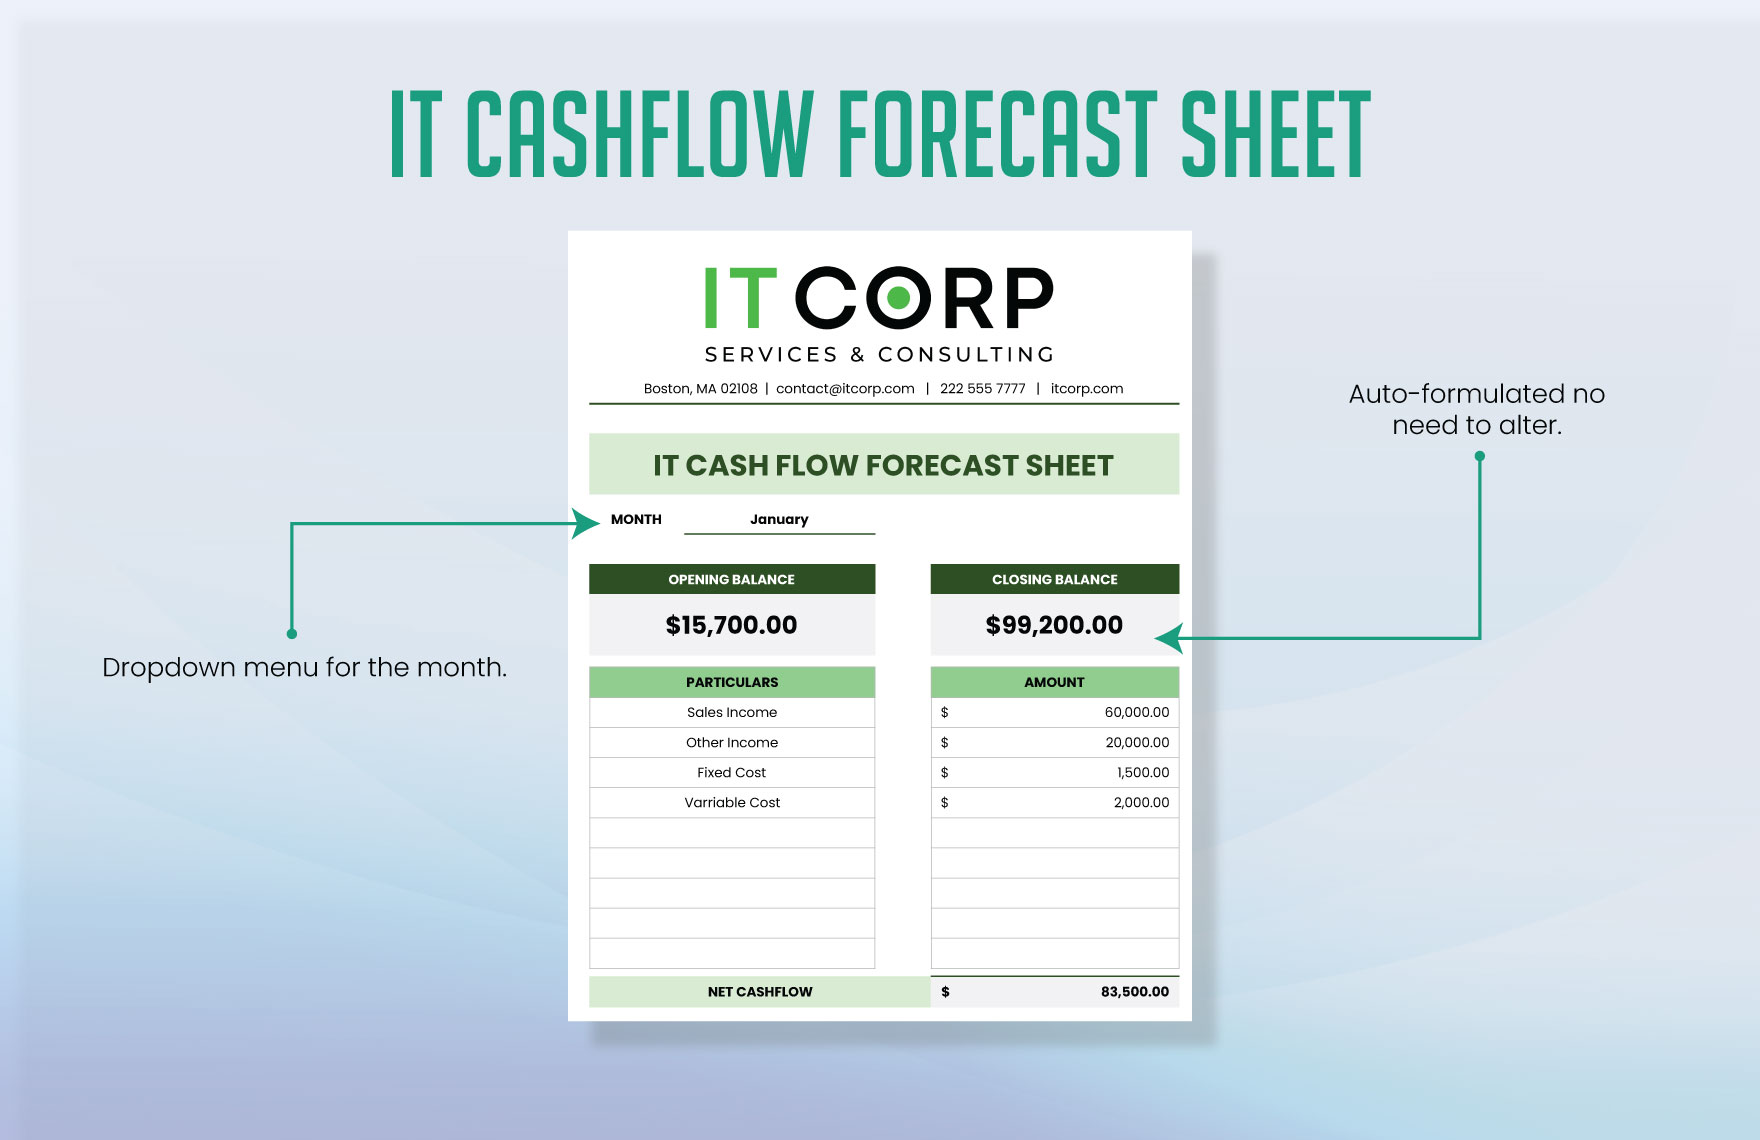 IT Cash Flow Forecast Sheet Template